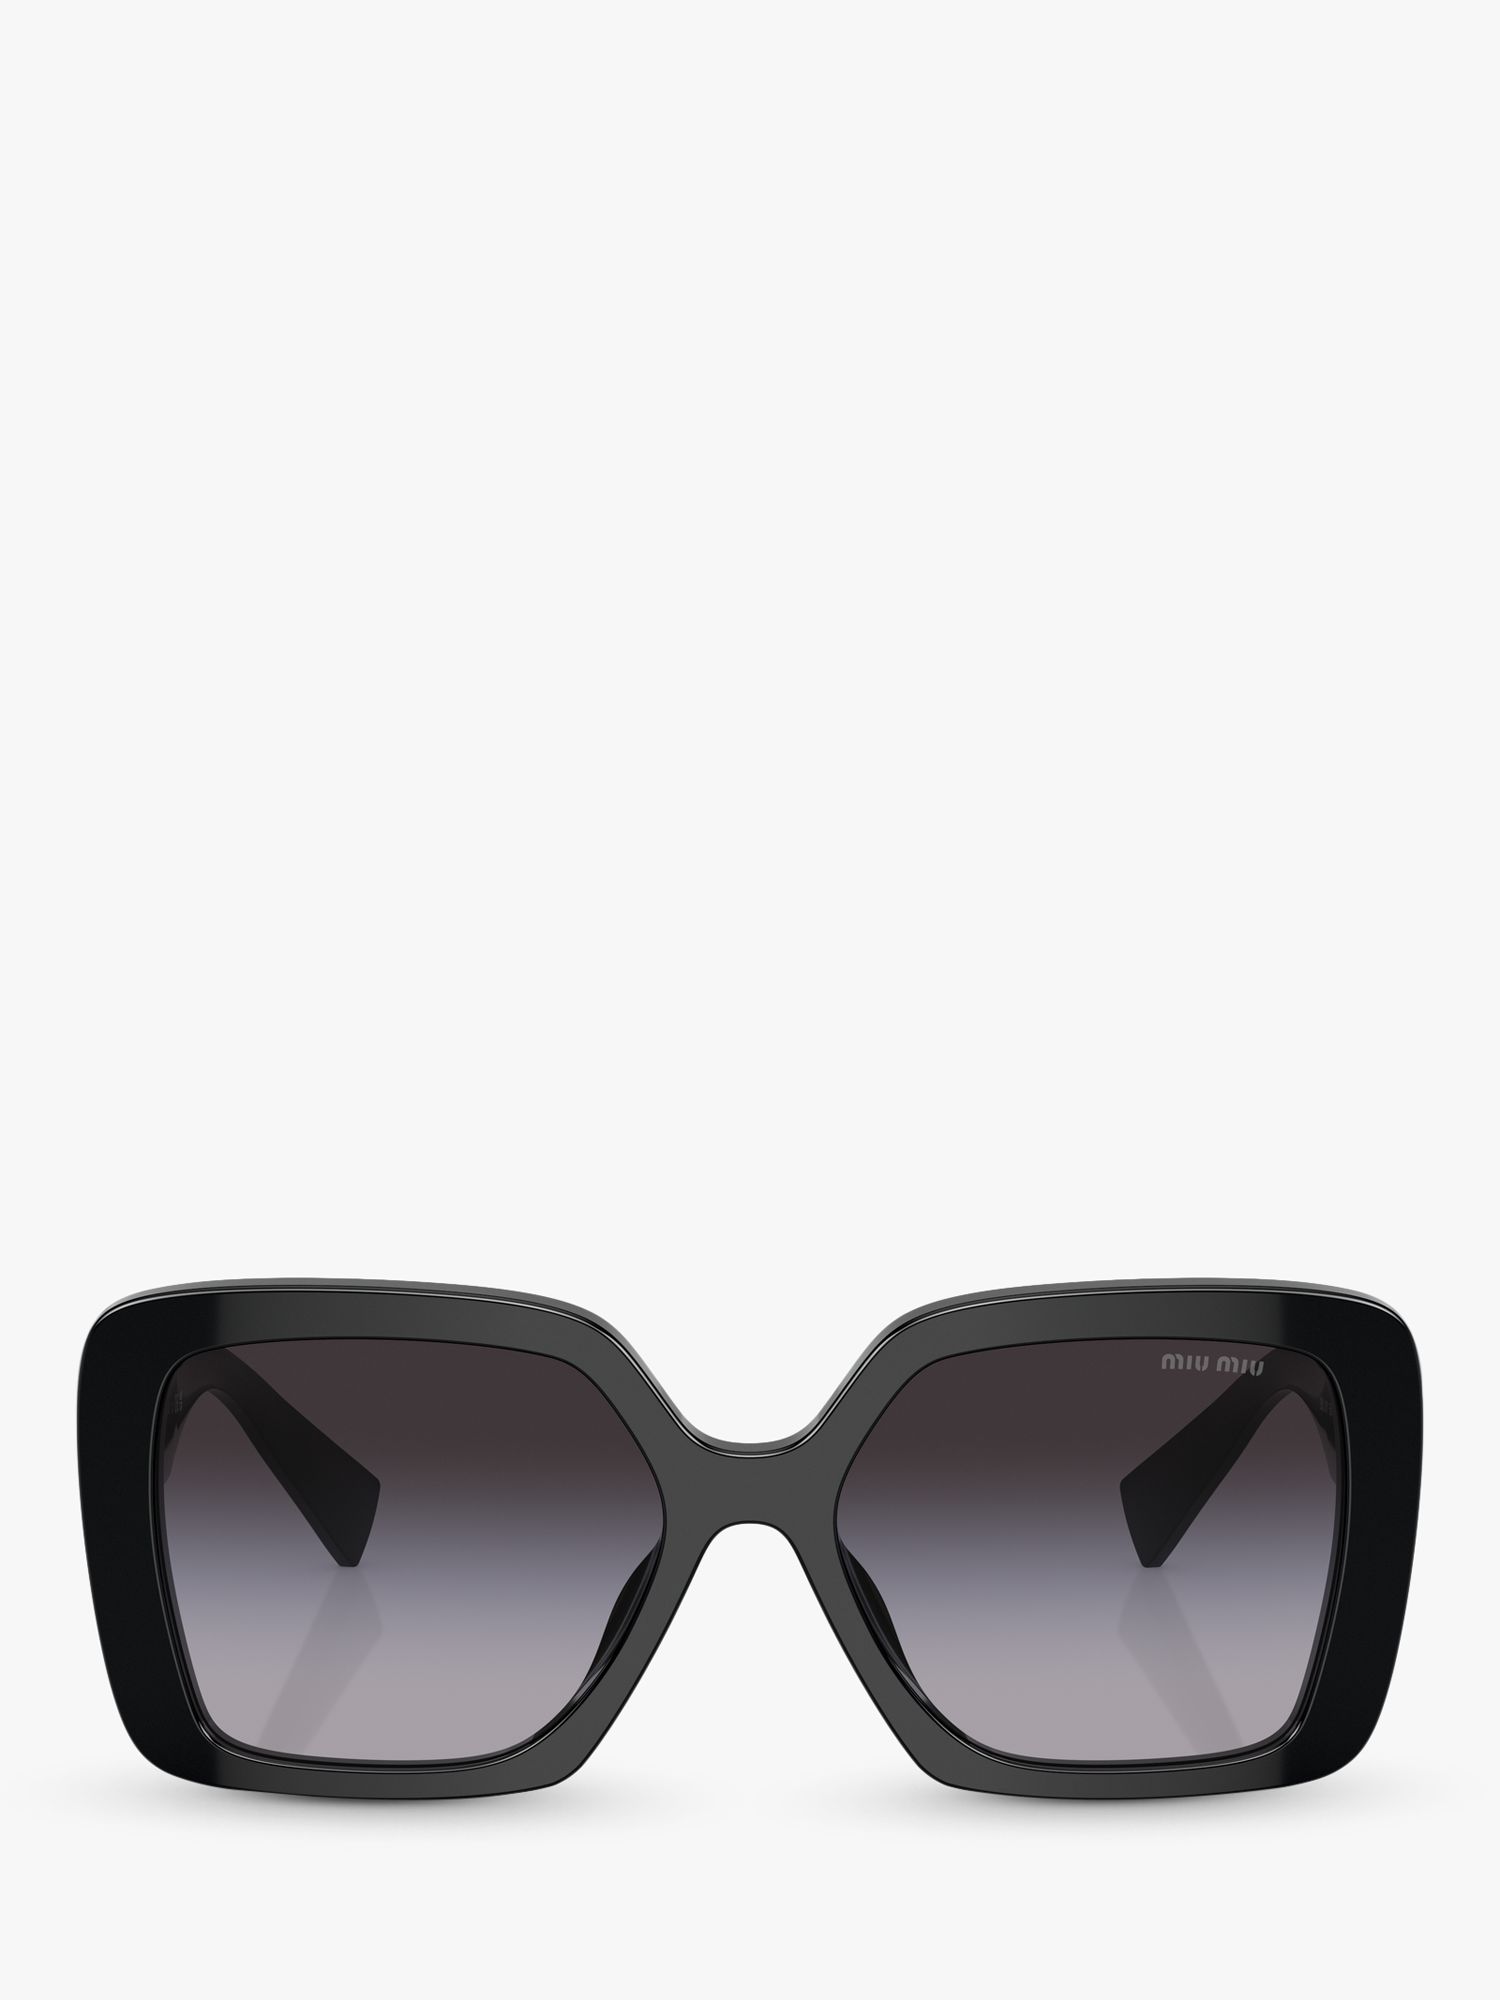 Miu Miu MU10YS8 Women's Rectangular Sunglasses, Black